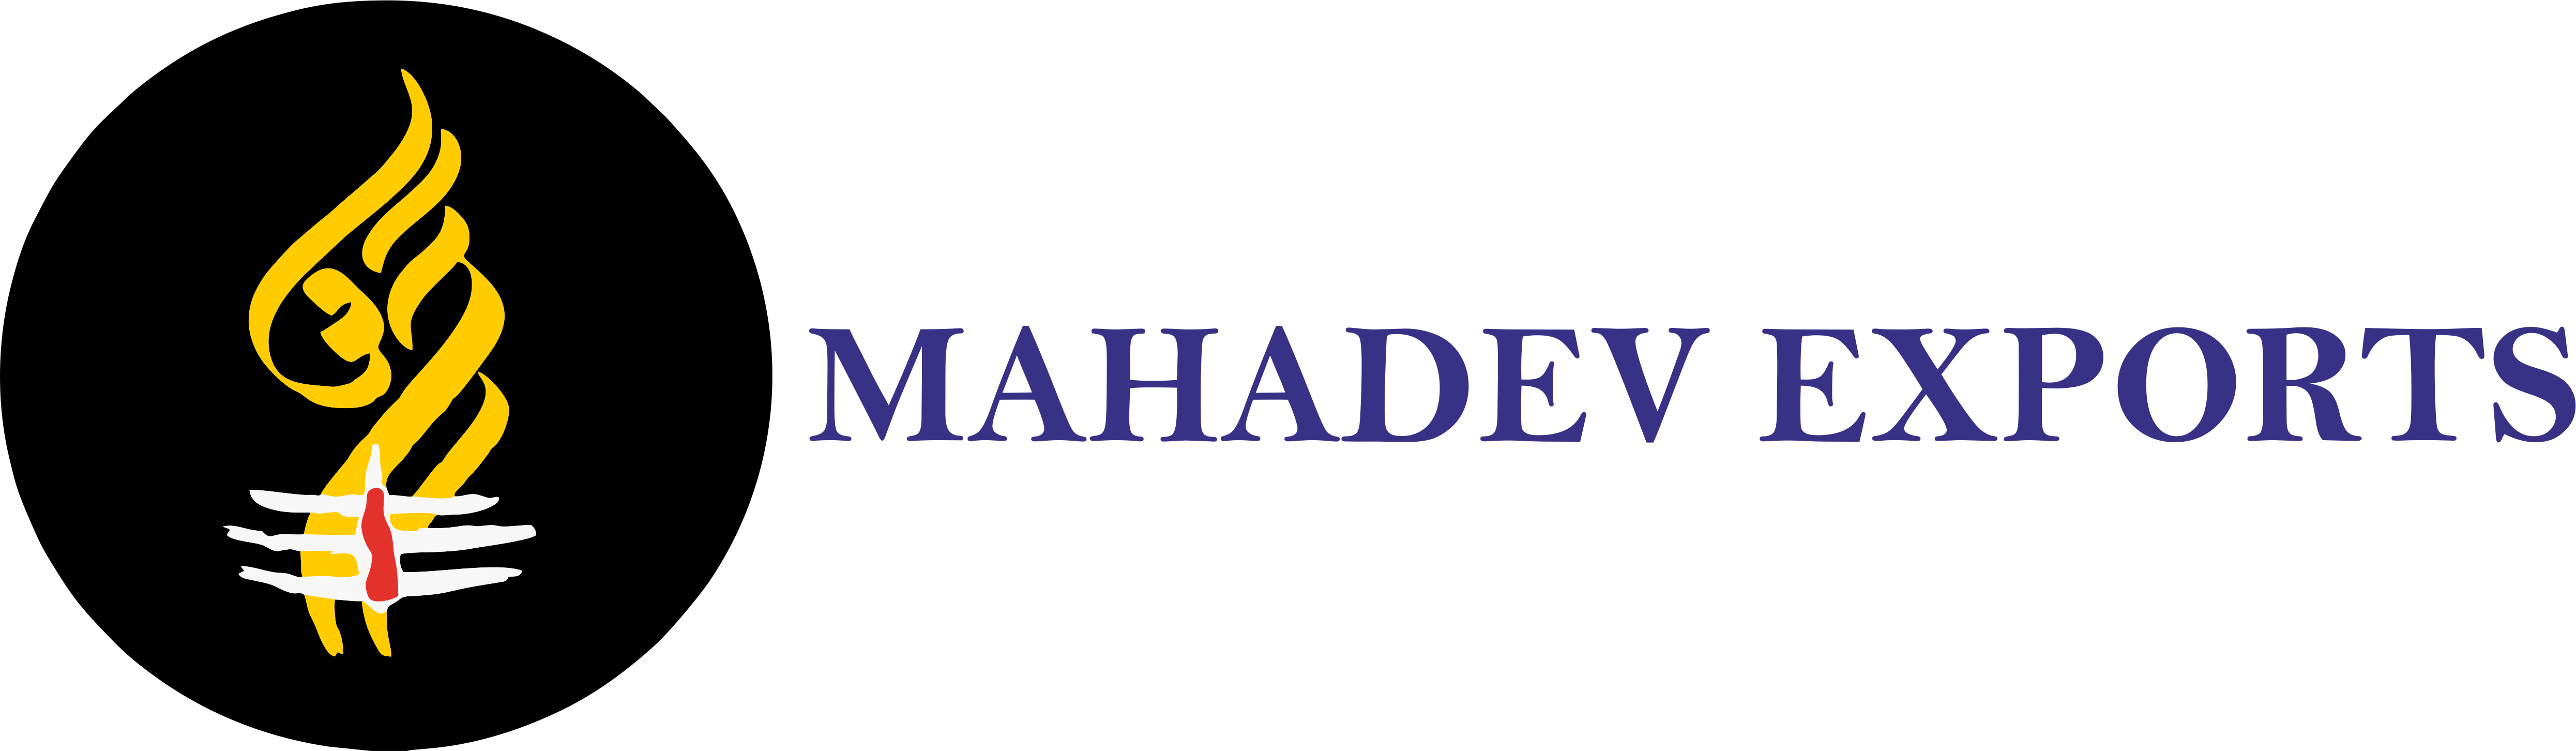 Mahadev Images Logo - Arwy Car Sticker Mahadev God Mahadev ...